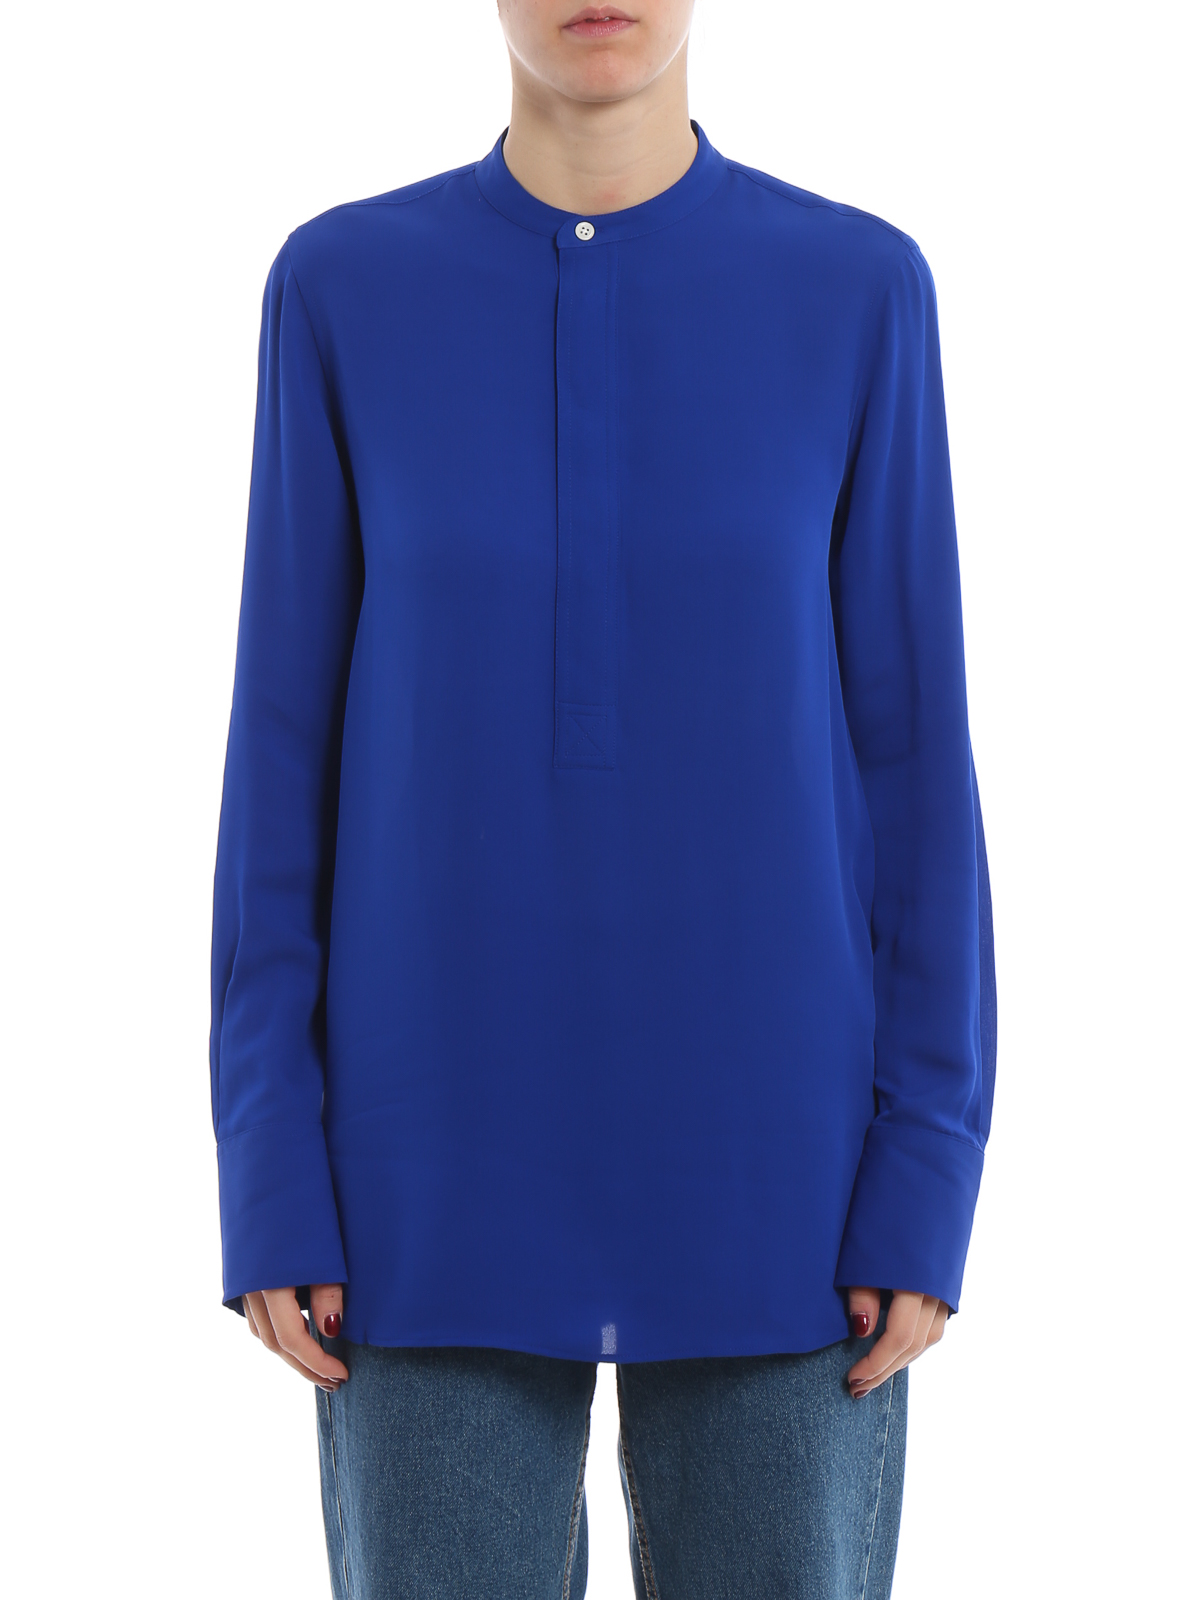 Blouses Polo Ralph Lauren - Collarless blue silk blouse - 211735612004